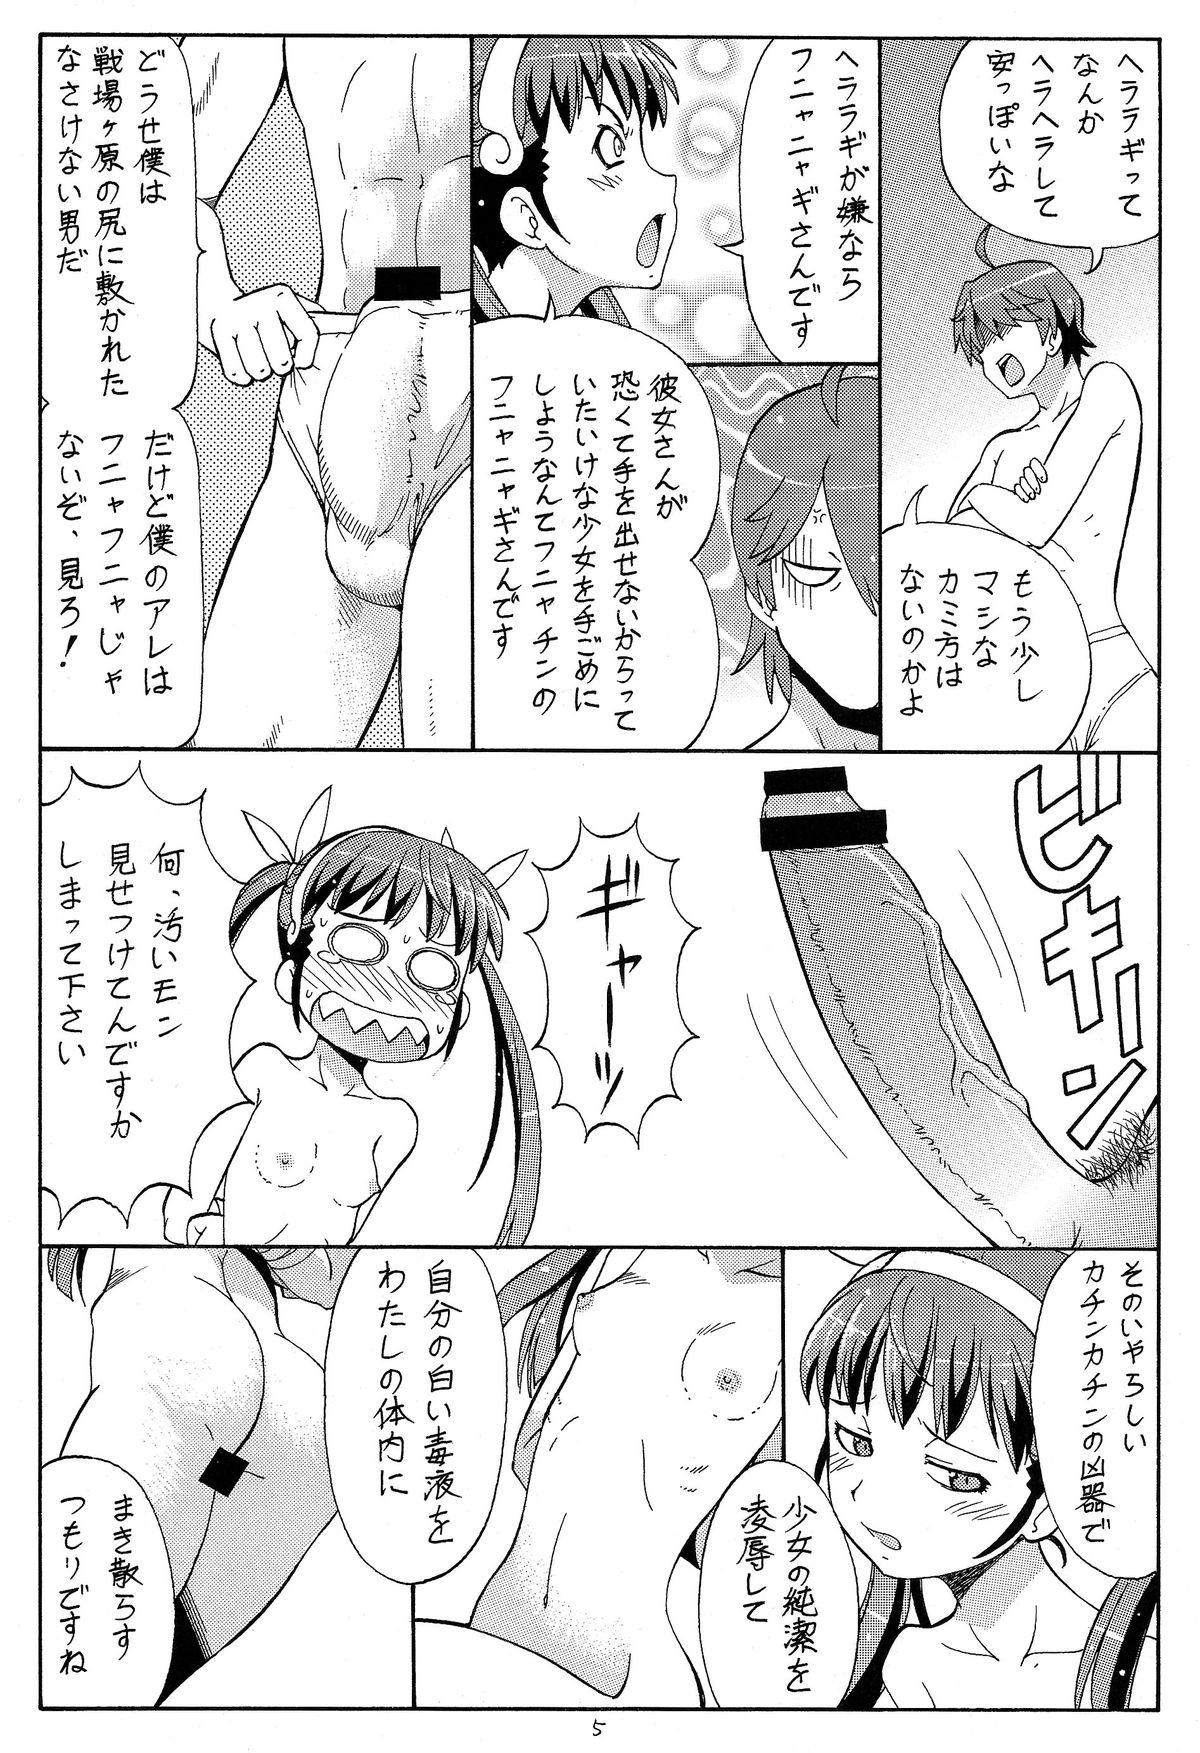 Sofa Hito ni Hakanai to Kaite "Araragi" to Yomu 4 - Bakemonogatari Sexcams - Page 7